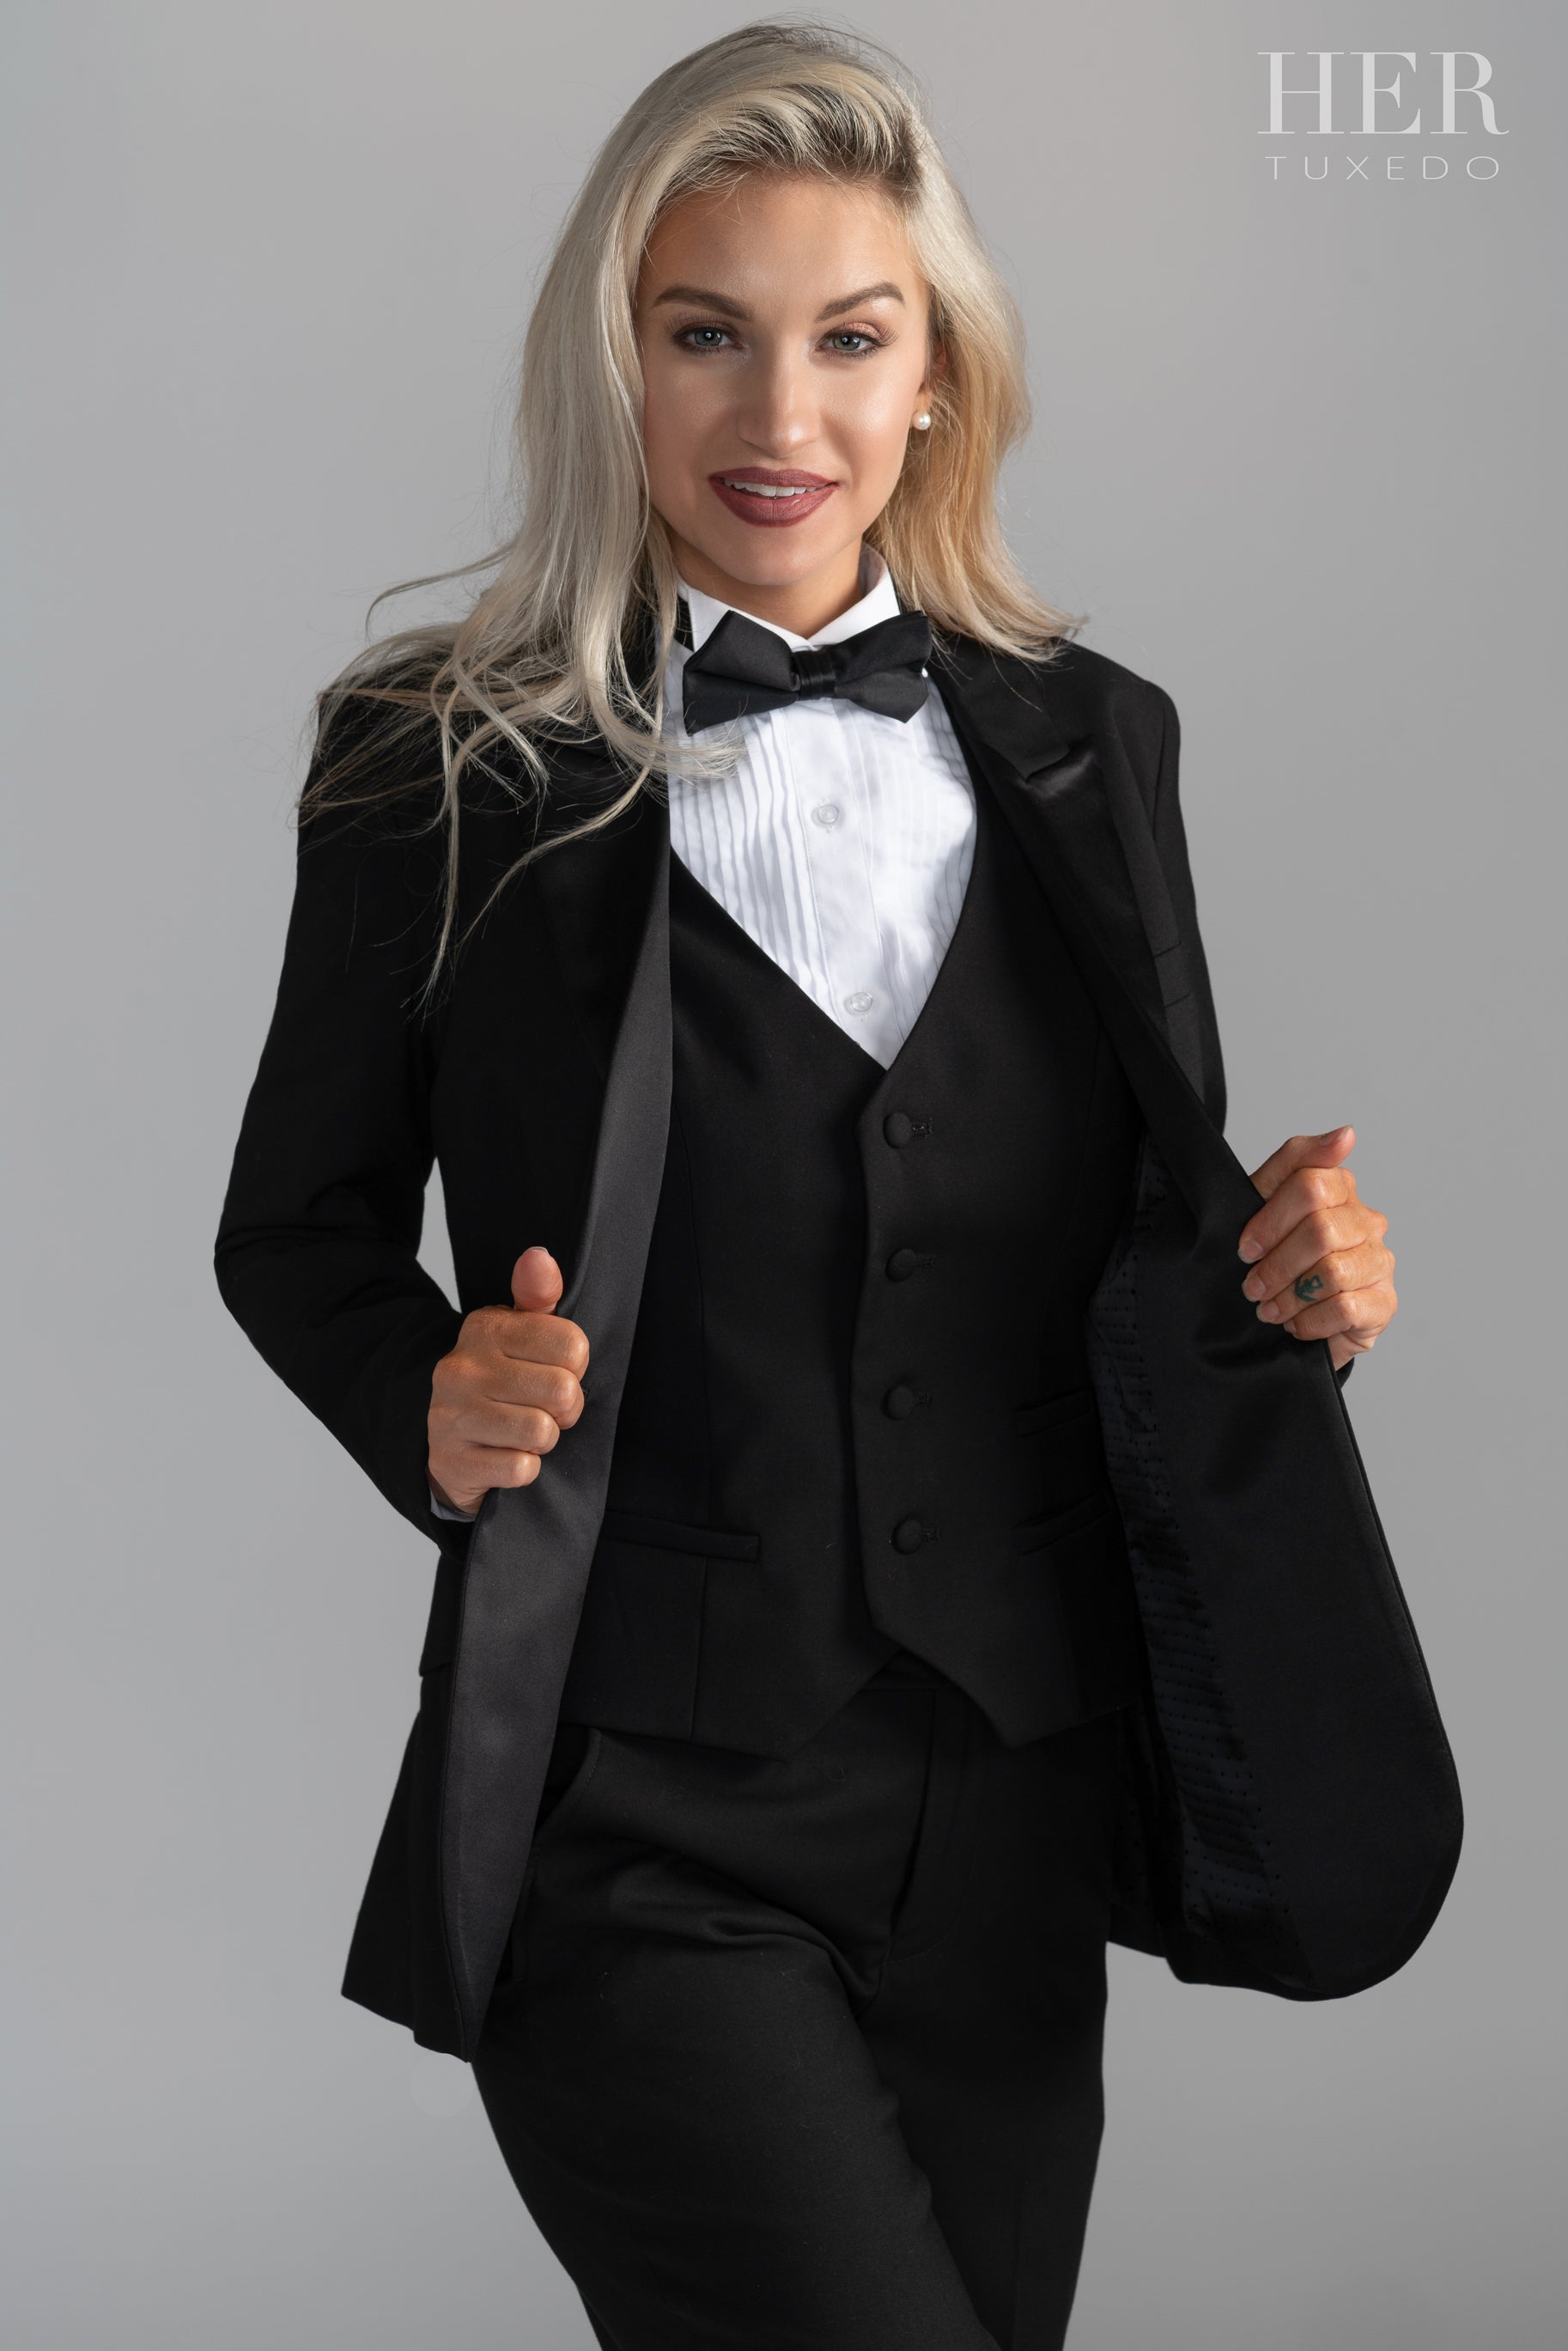 Woman's Black Tuxedo Suit – Her Tuxedo